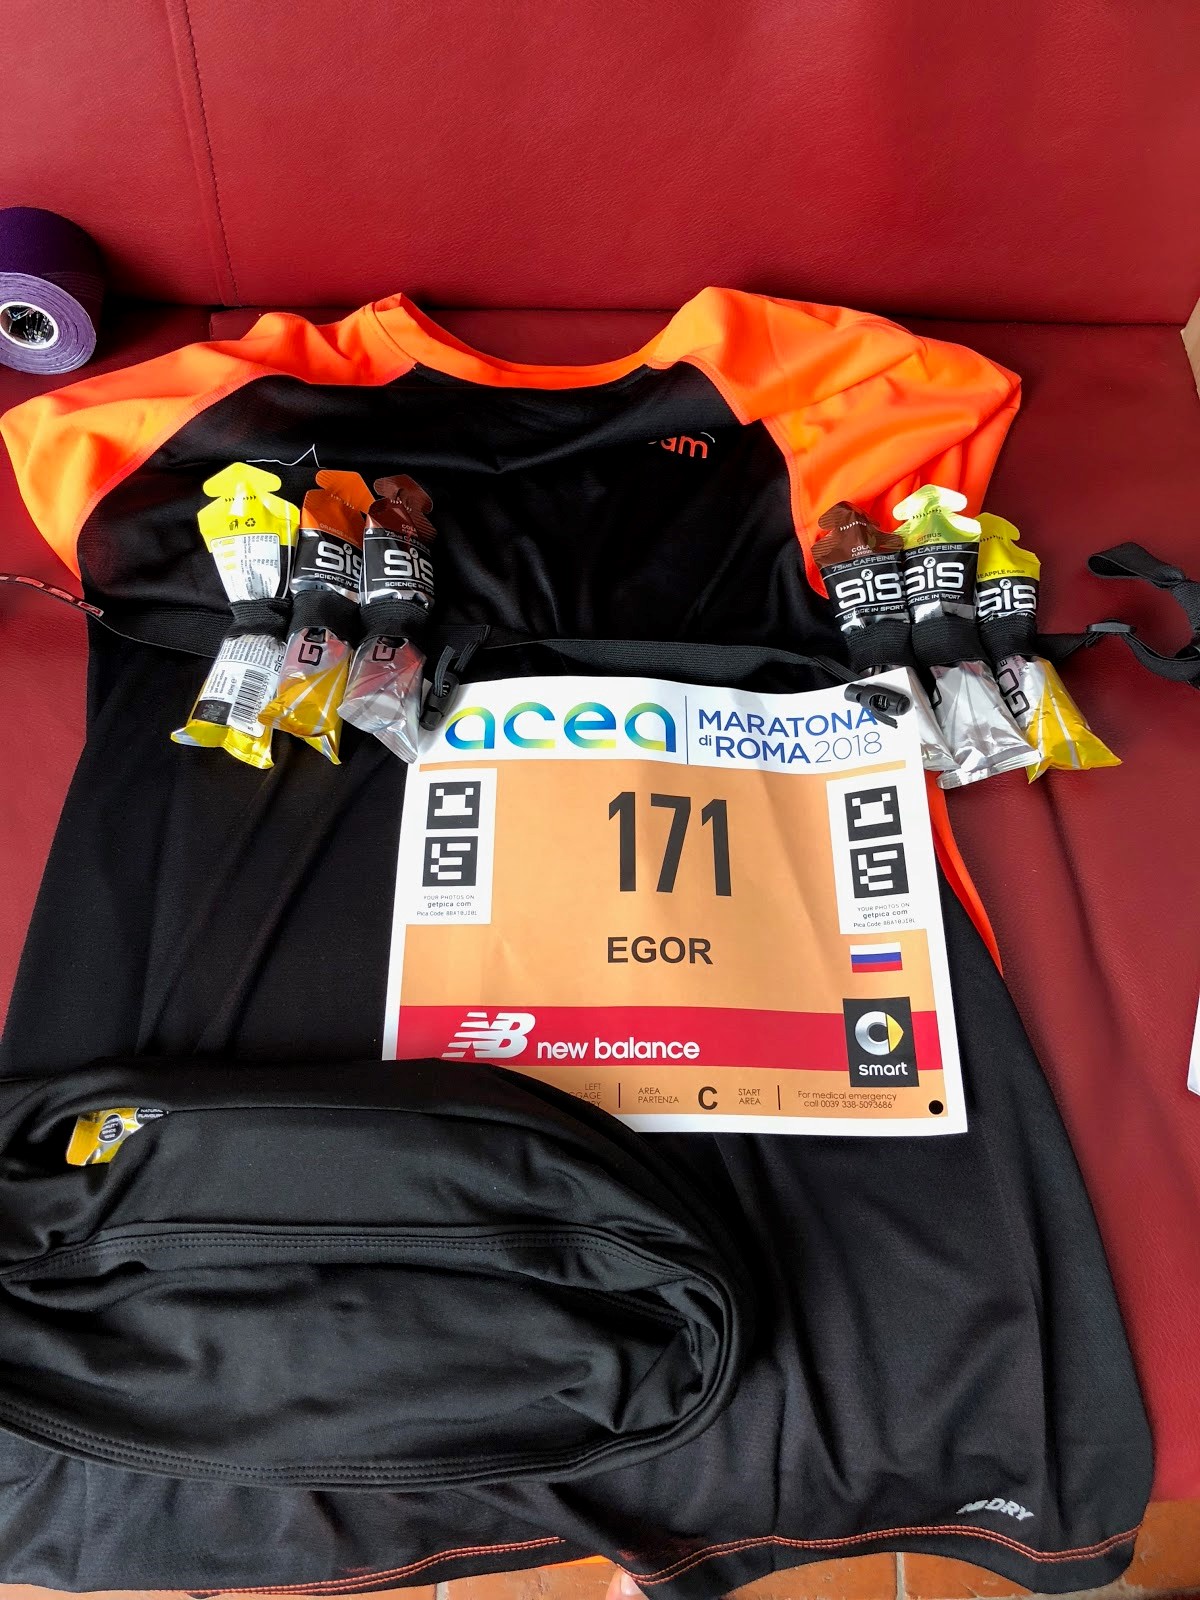 [Хабра-оффтоп] Maratona di Roma, или первый марафон для ИТ-шника - 12